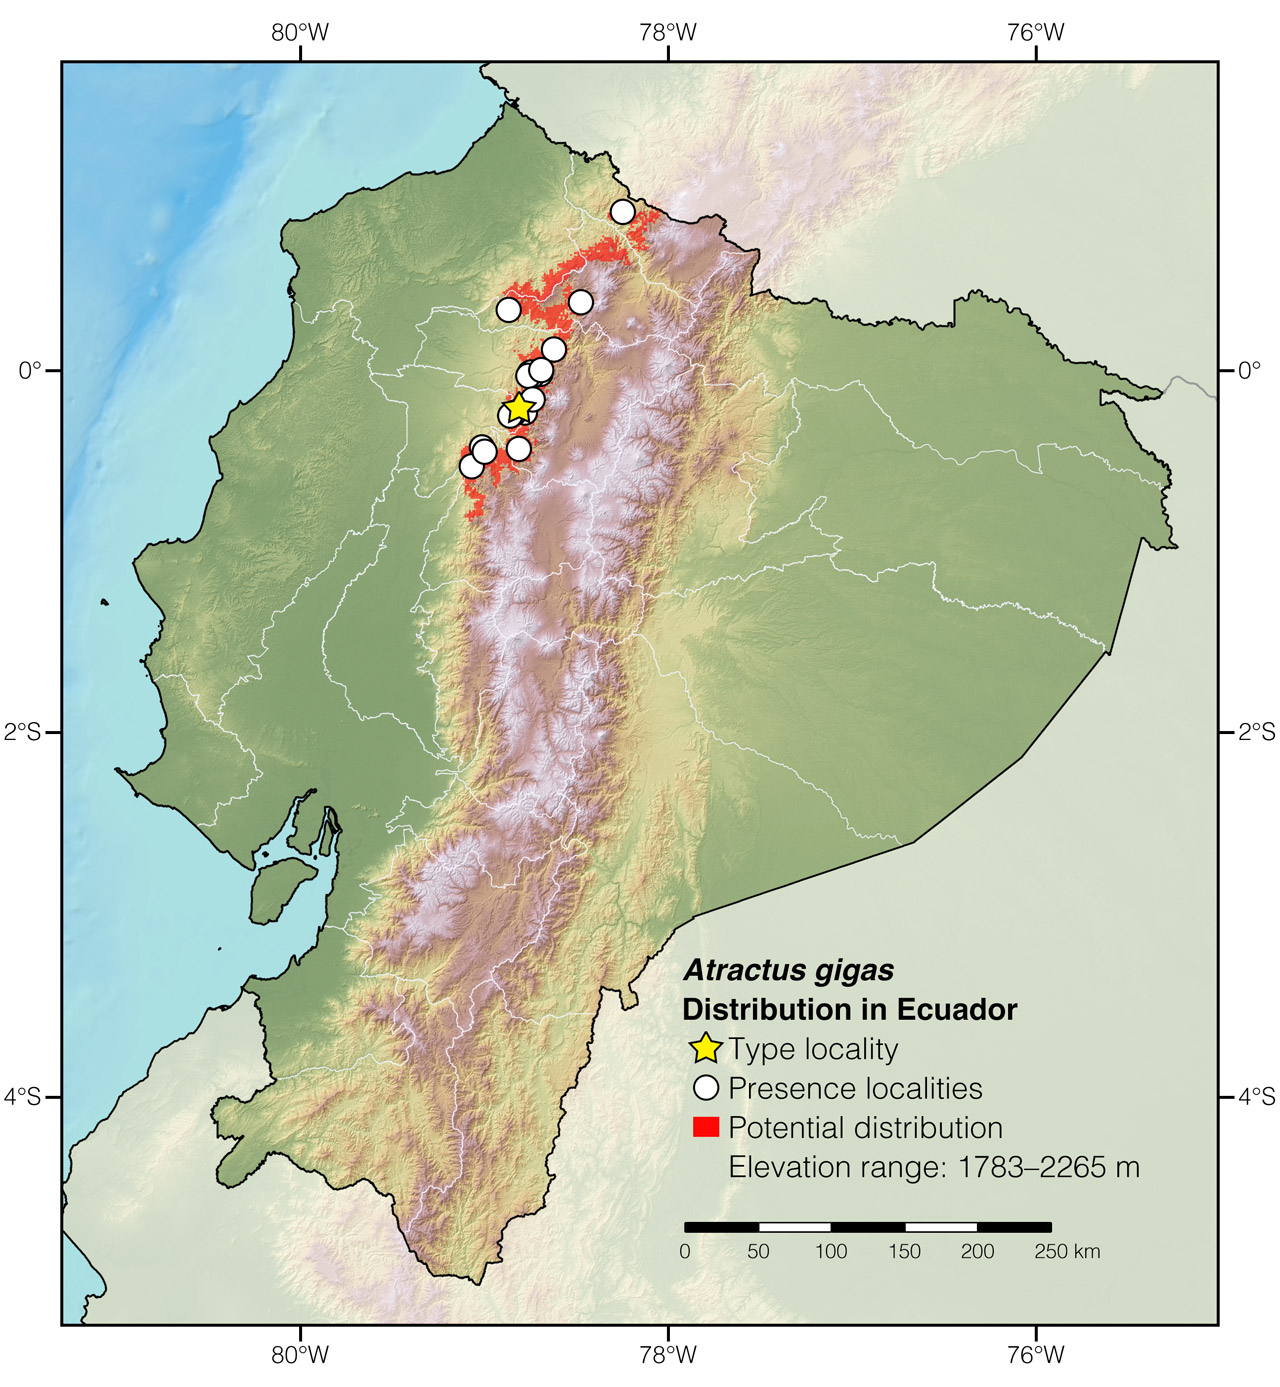 Distribution of Atractus gigas in Ecuador